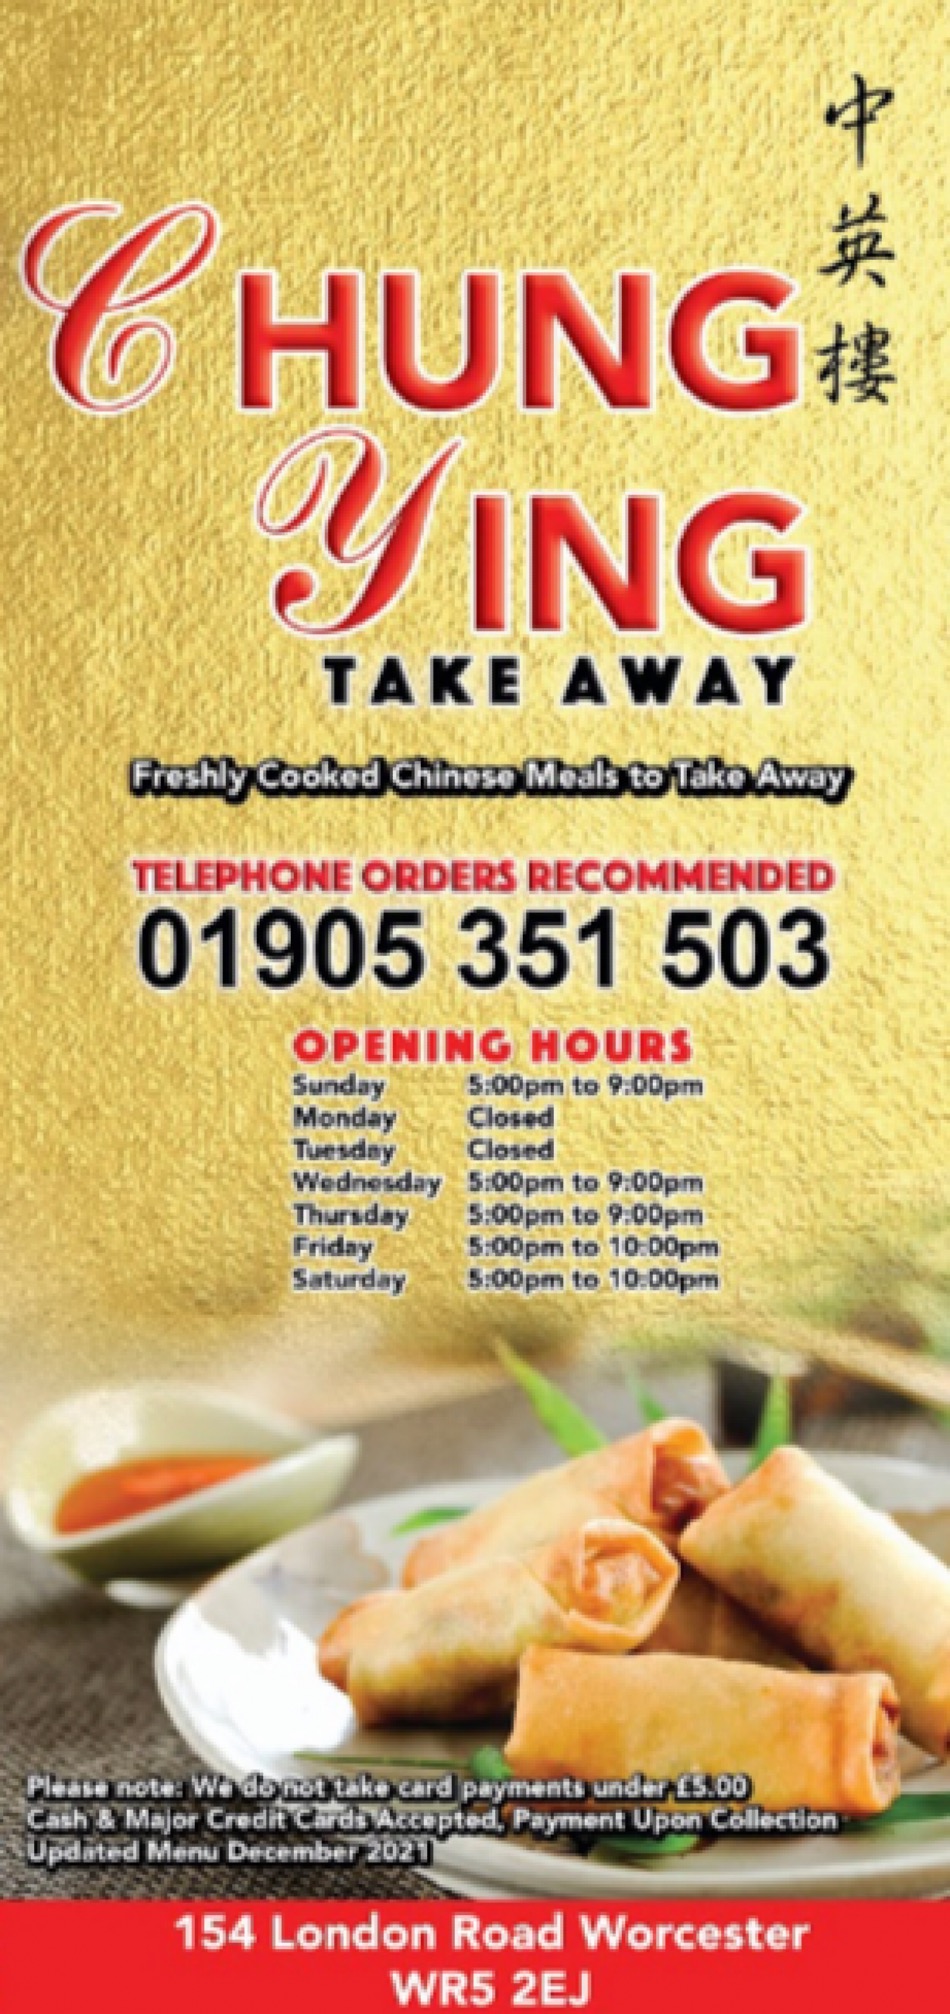 Takeaway Restaurant Menu Page - Chung Ying - Worcester